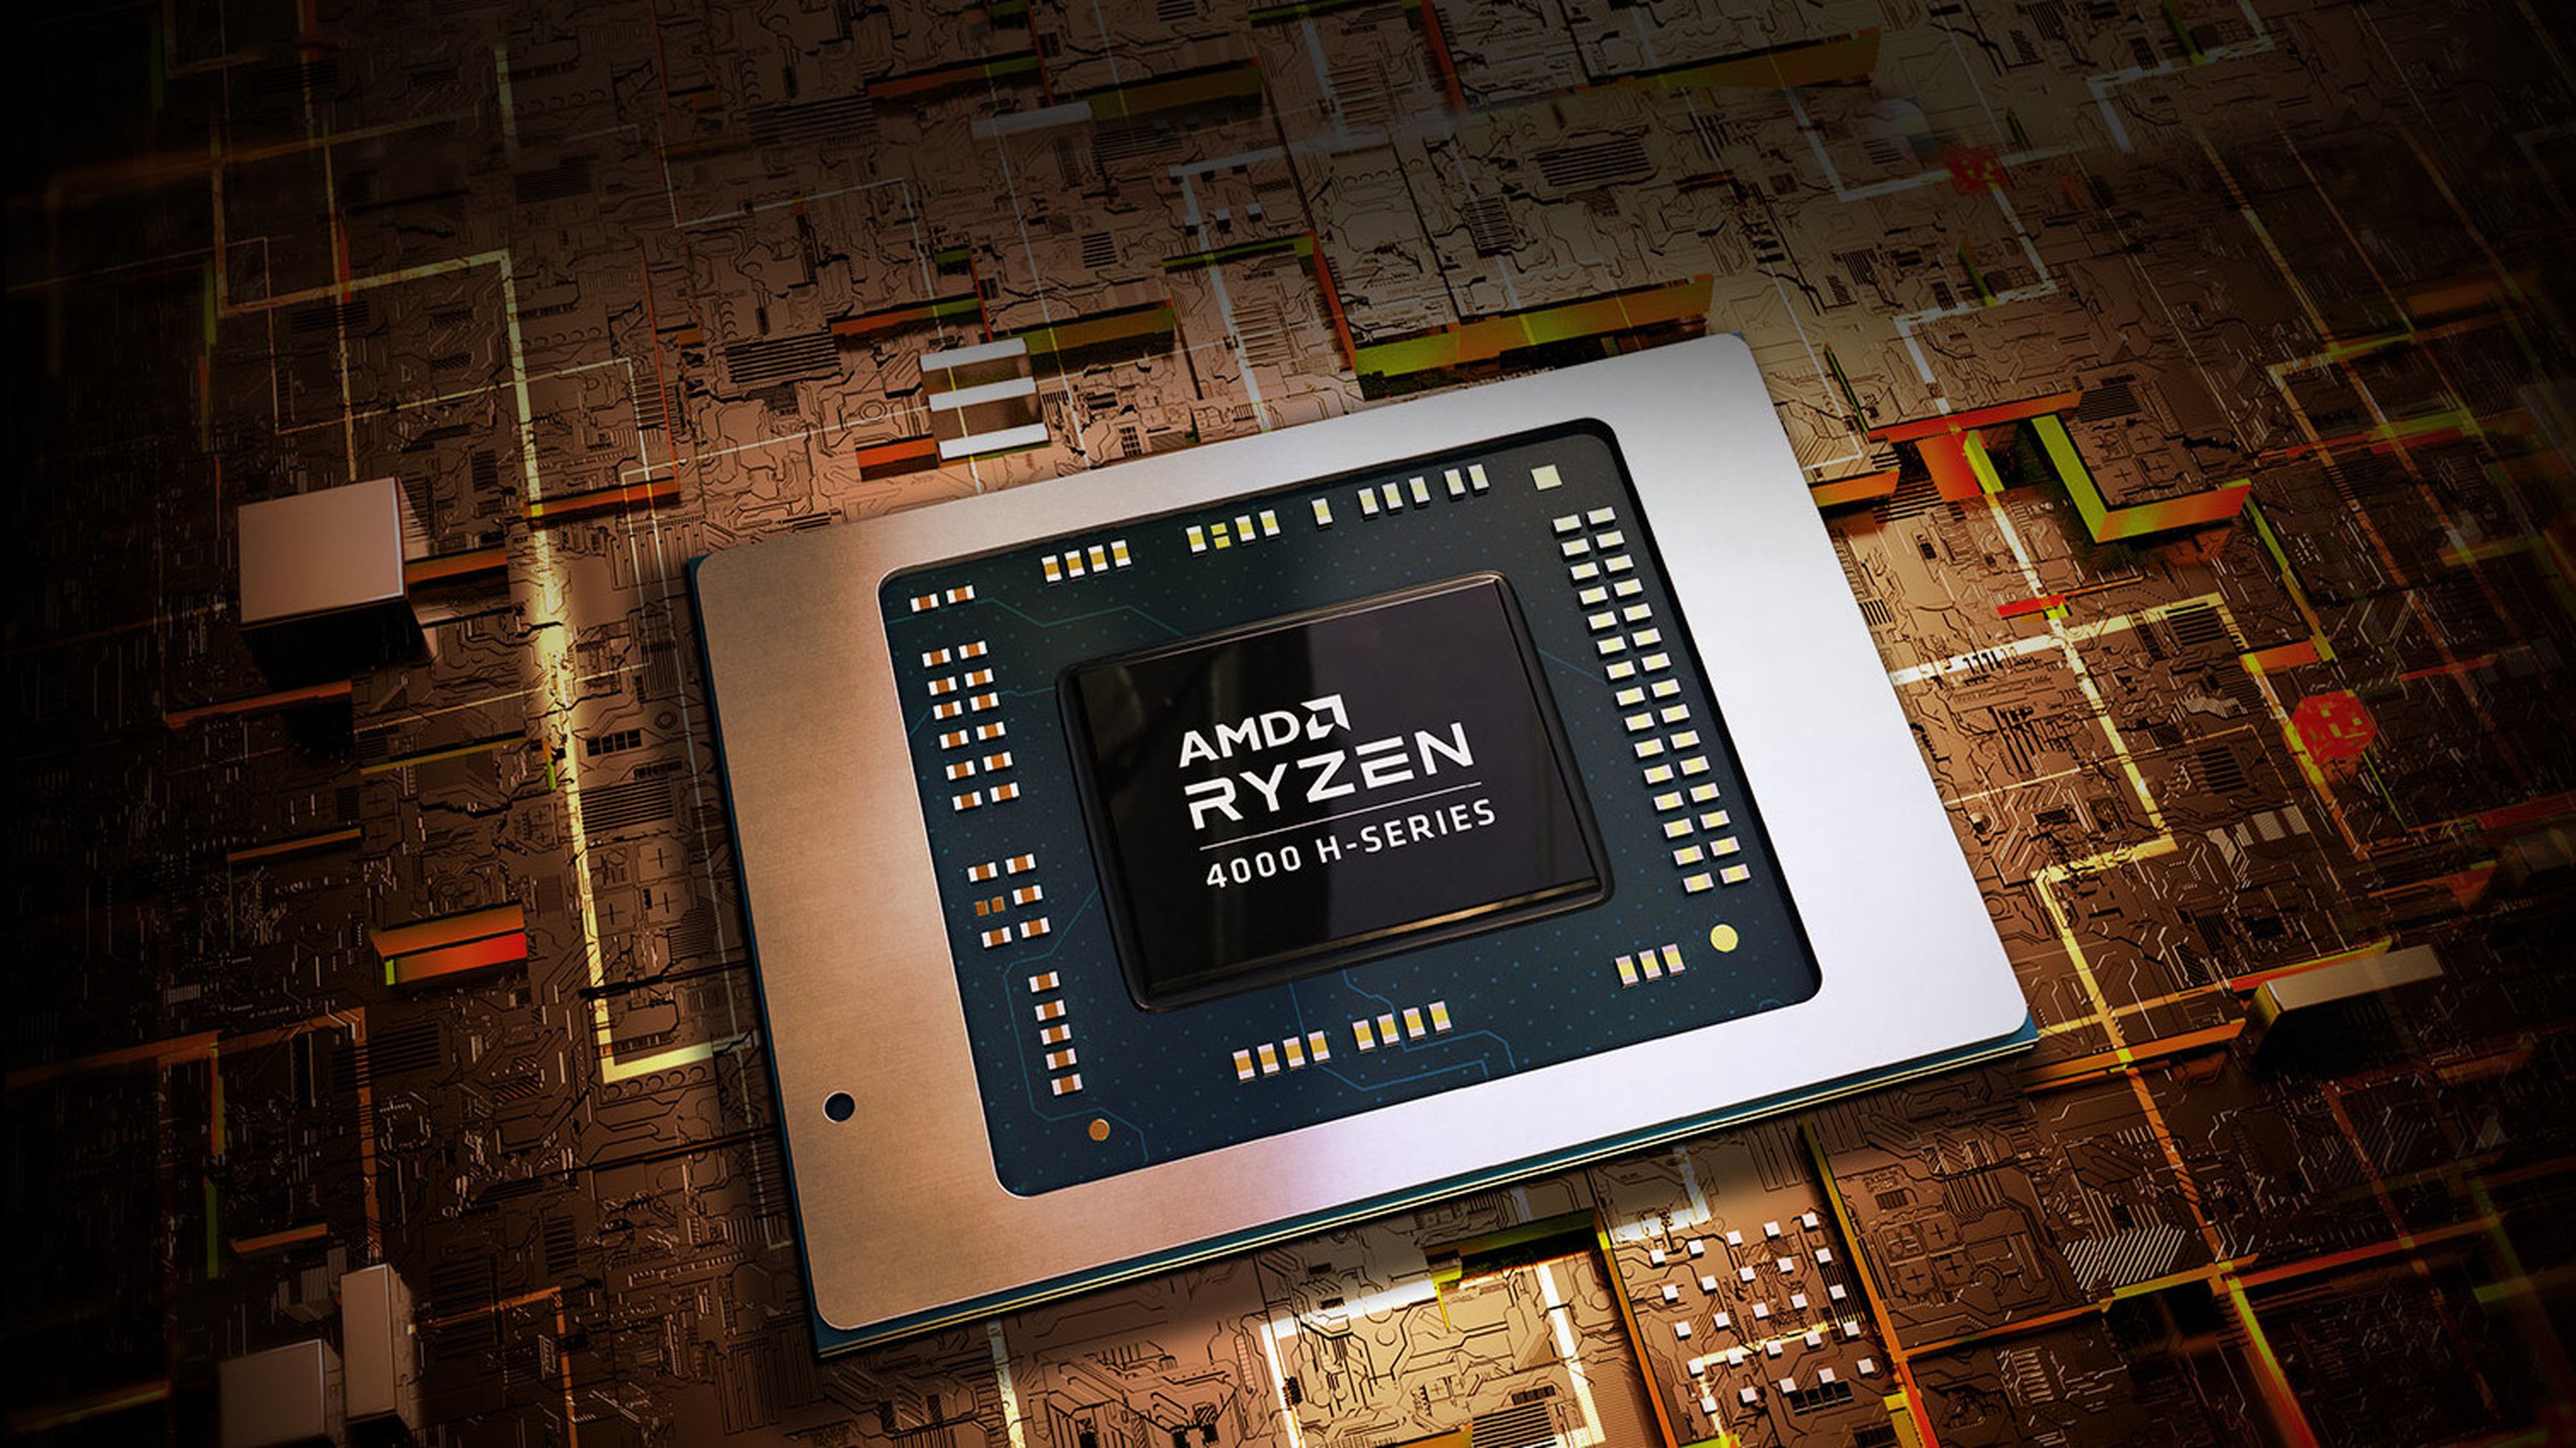 AMD Ryzen 4000H